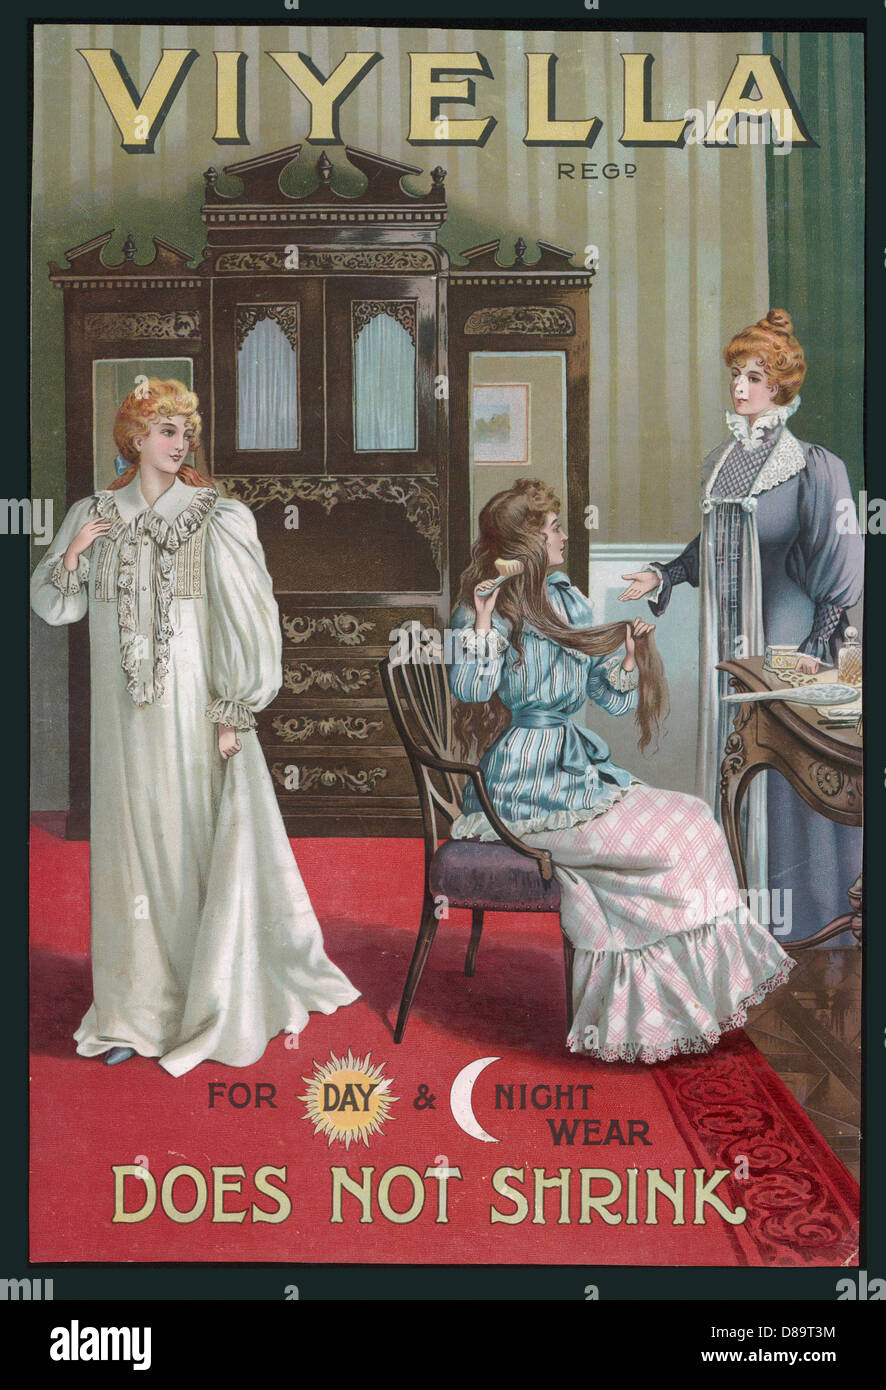 Viyella Nightwear 1890s Stock Photo - Alamy